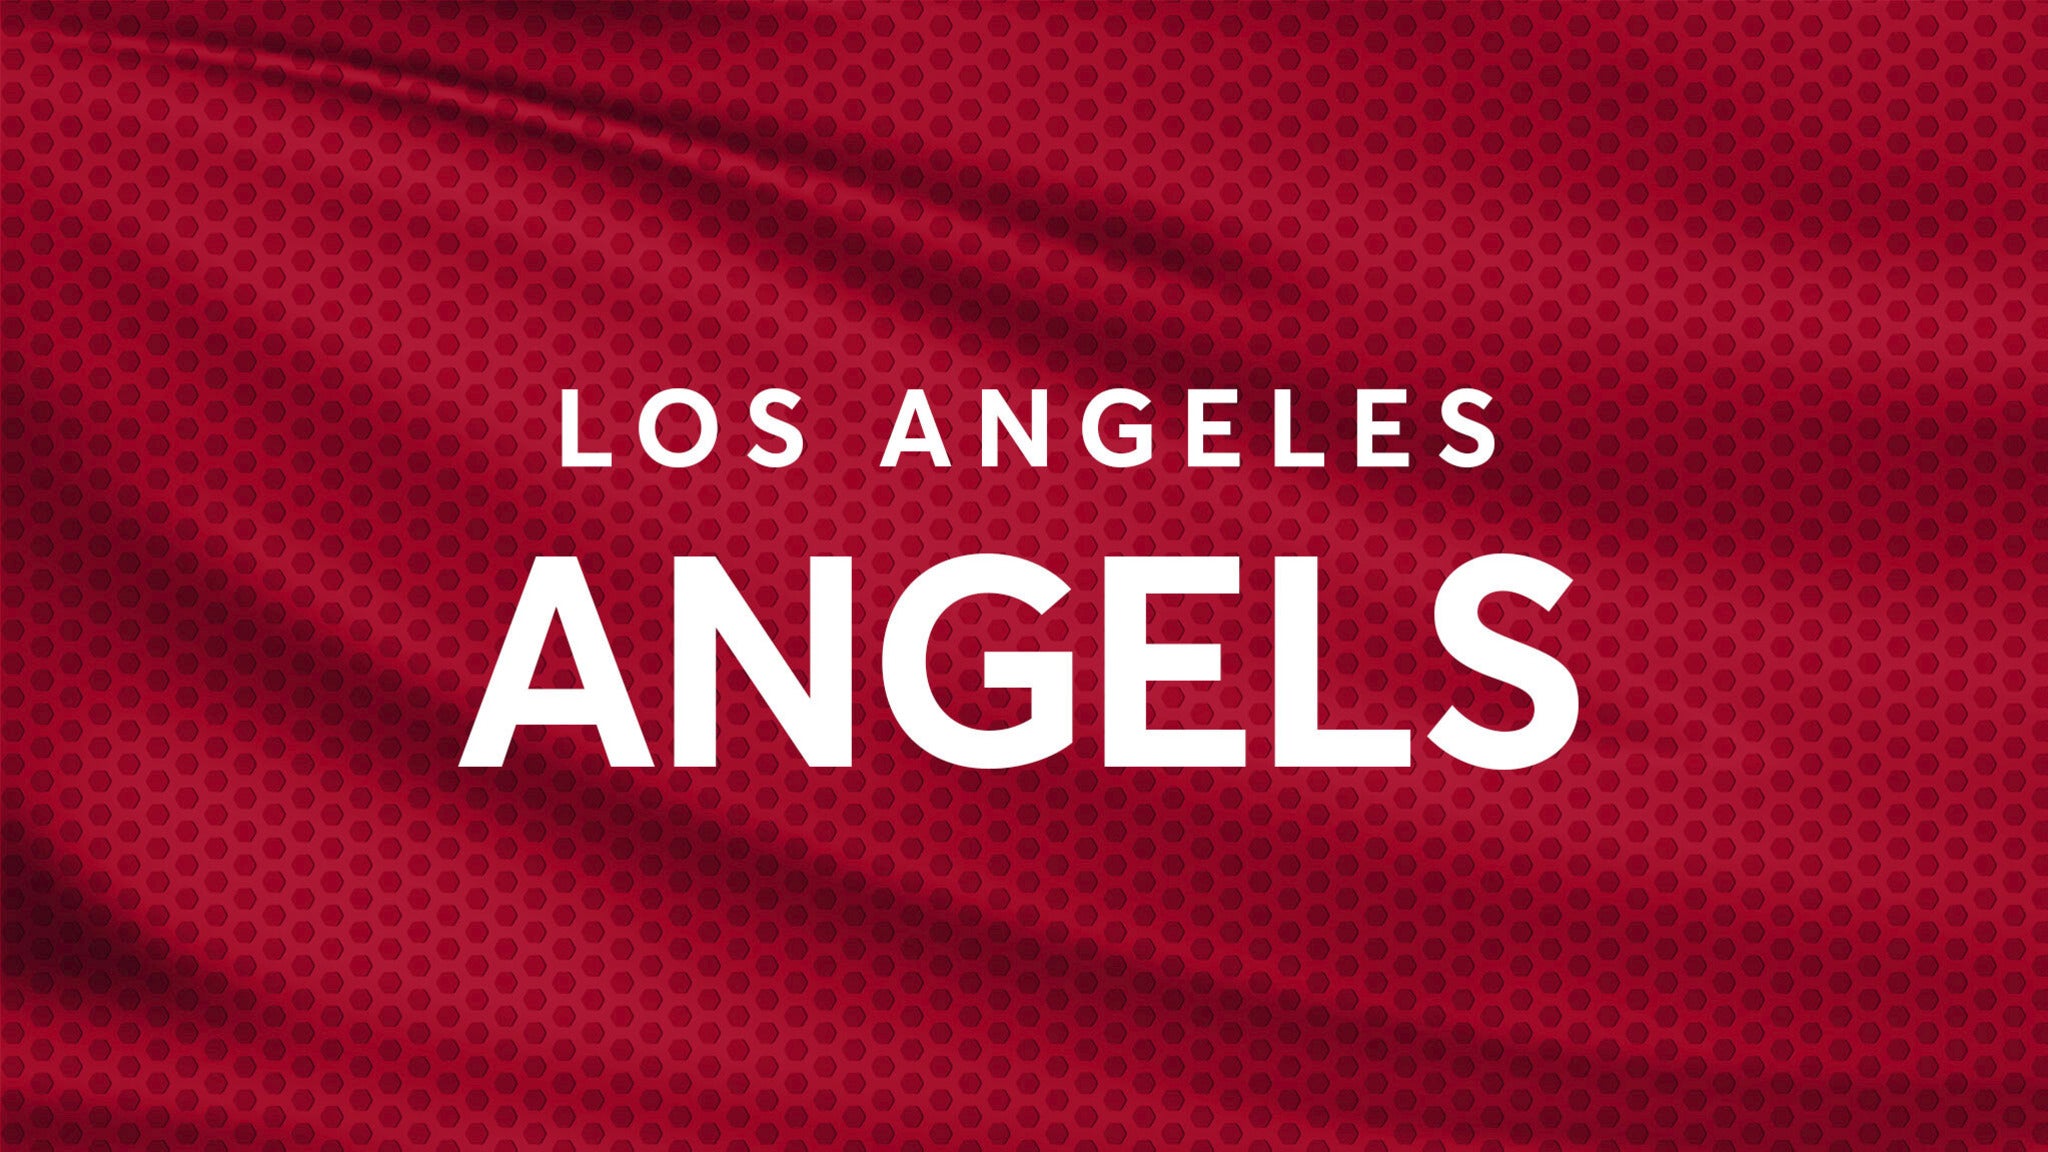 Los Angeles Angels vs. Texas Rangers - Anaheim, CA 92806